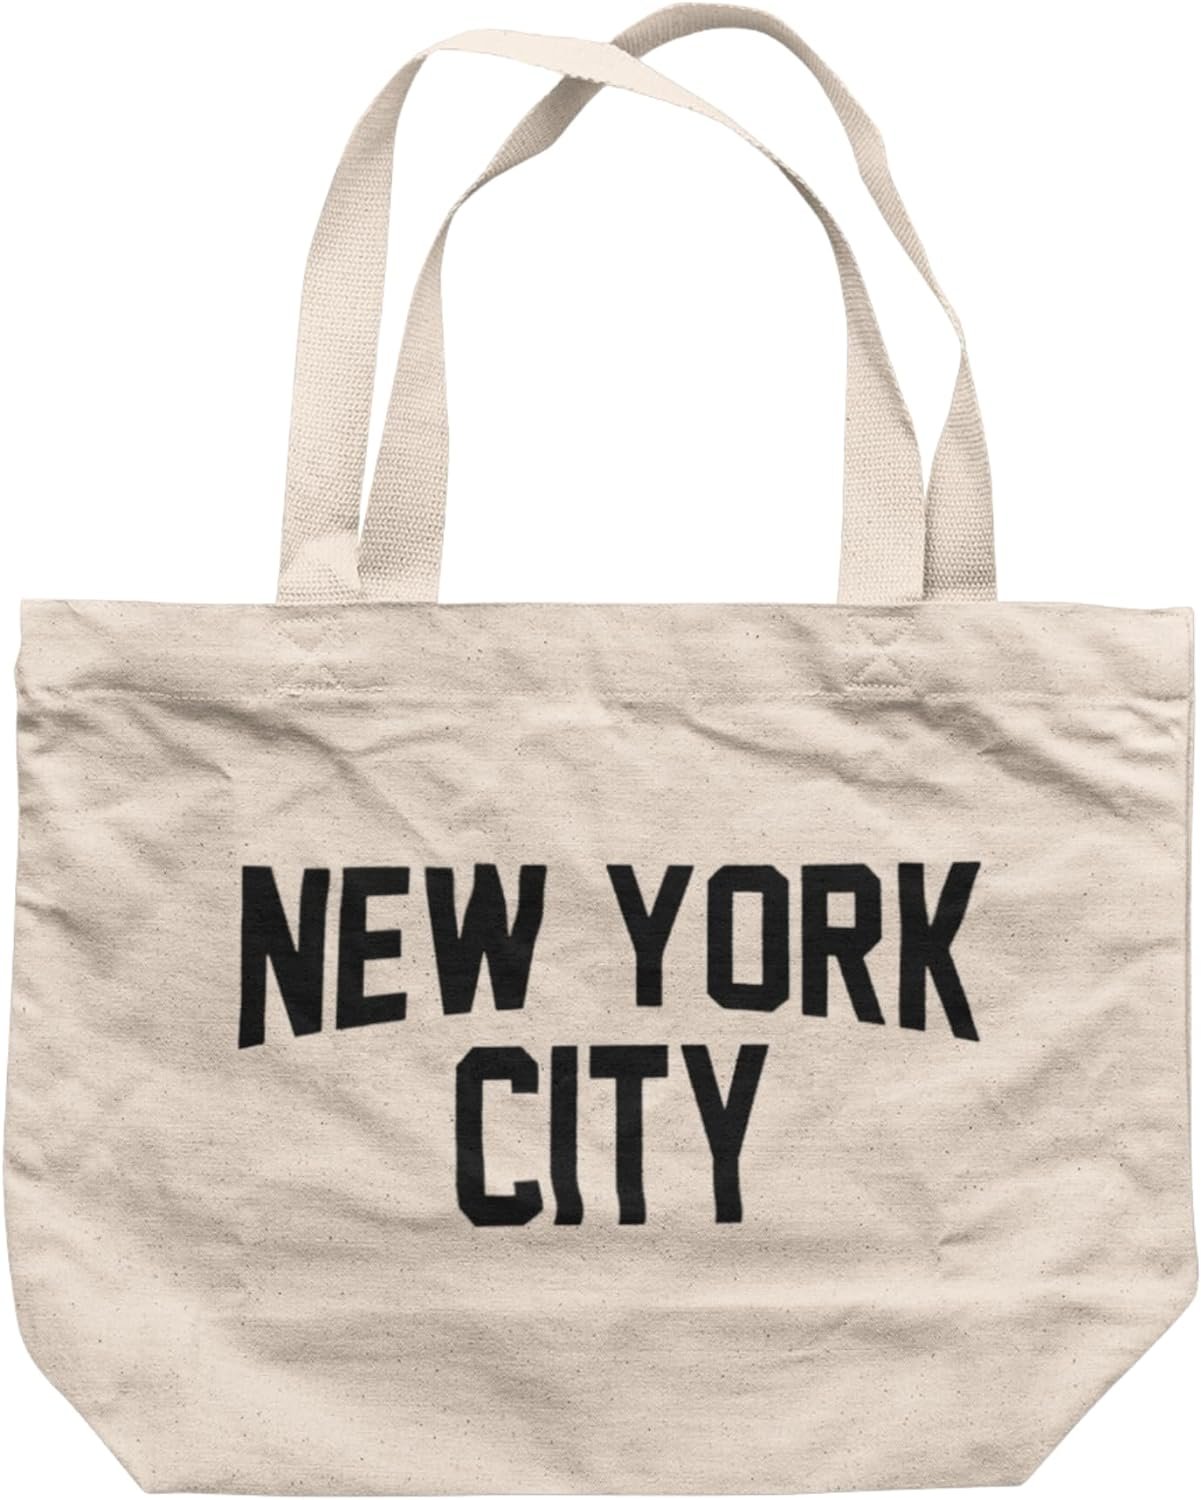 New York CIty - Jumbo Size Bag Vintage Style Retro City Cotton Canvas